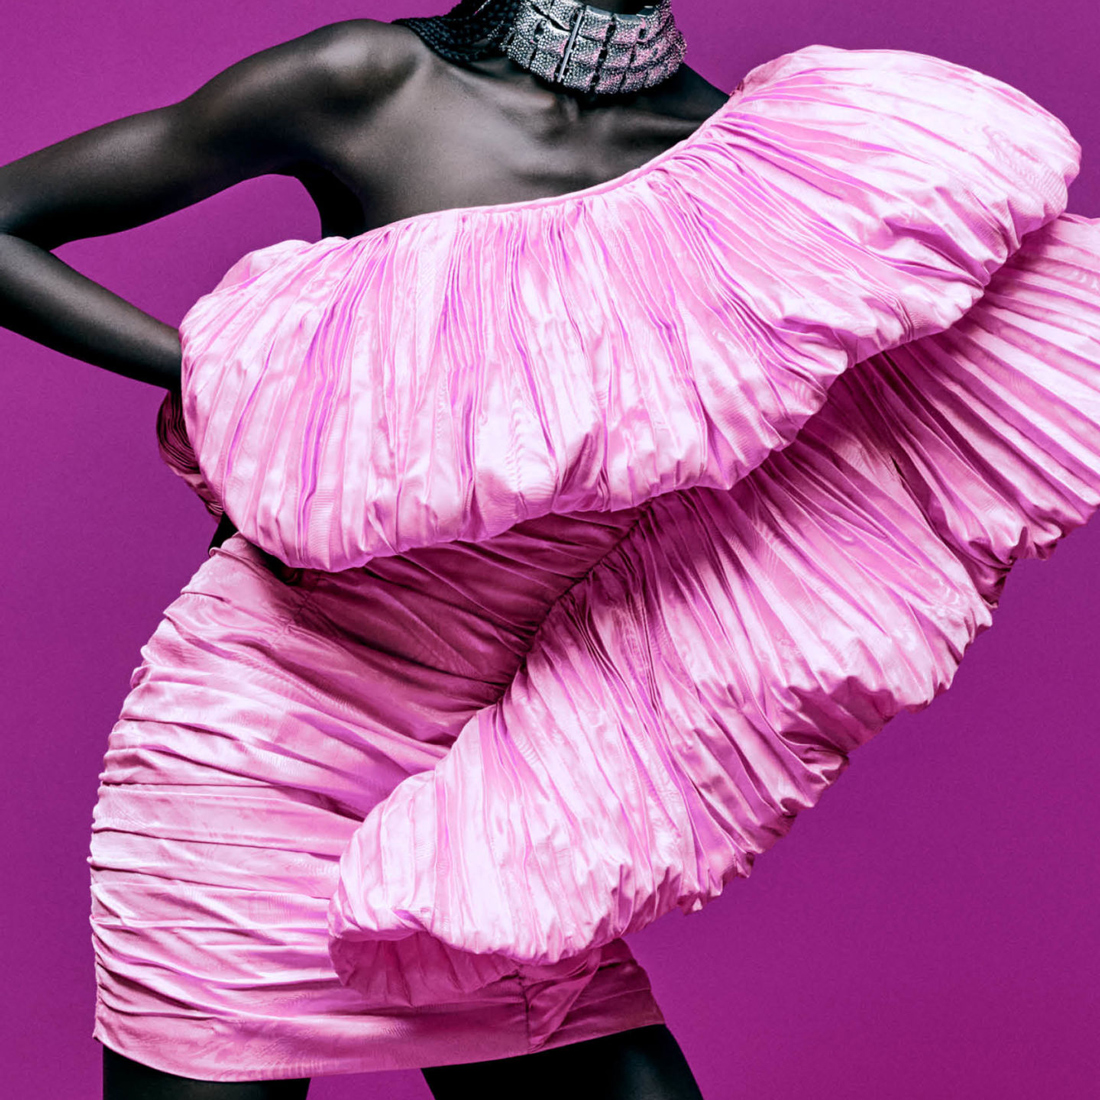 H&M Innovation Stories Pink Dress